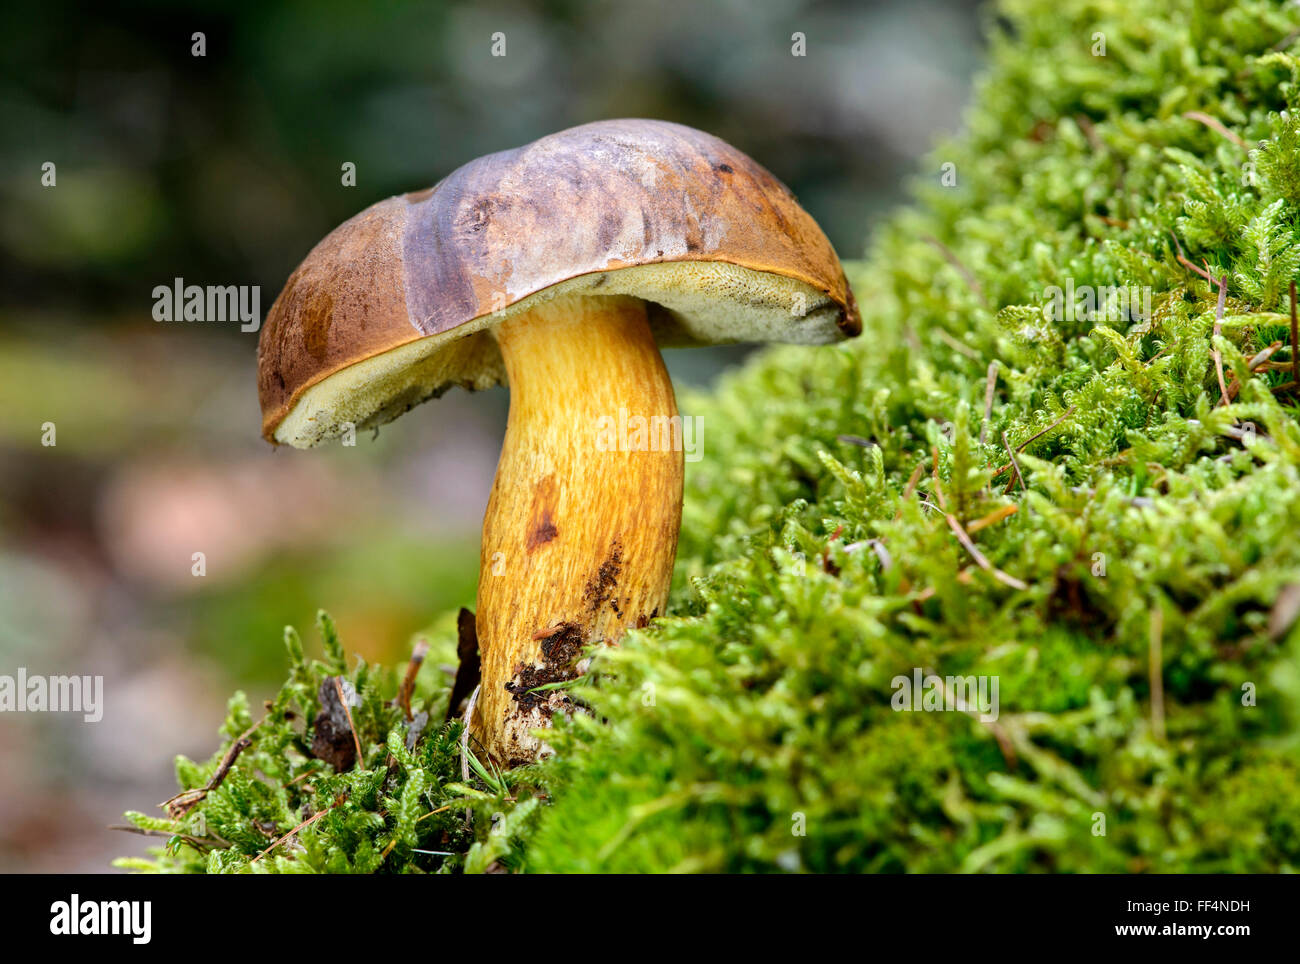 Bay bolete (Imleria badia), edible mushroom, Canton of Fribourg, Switzerland Stock Photo